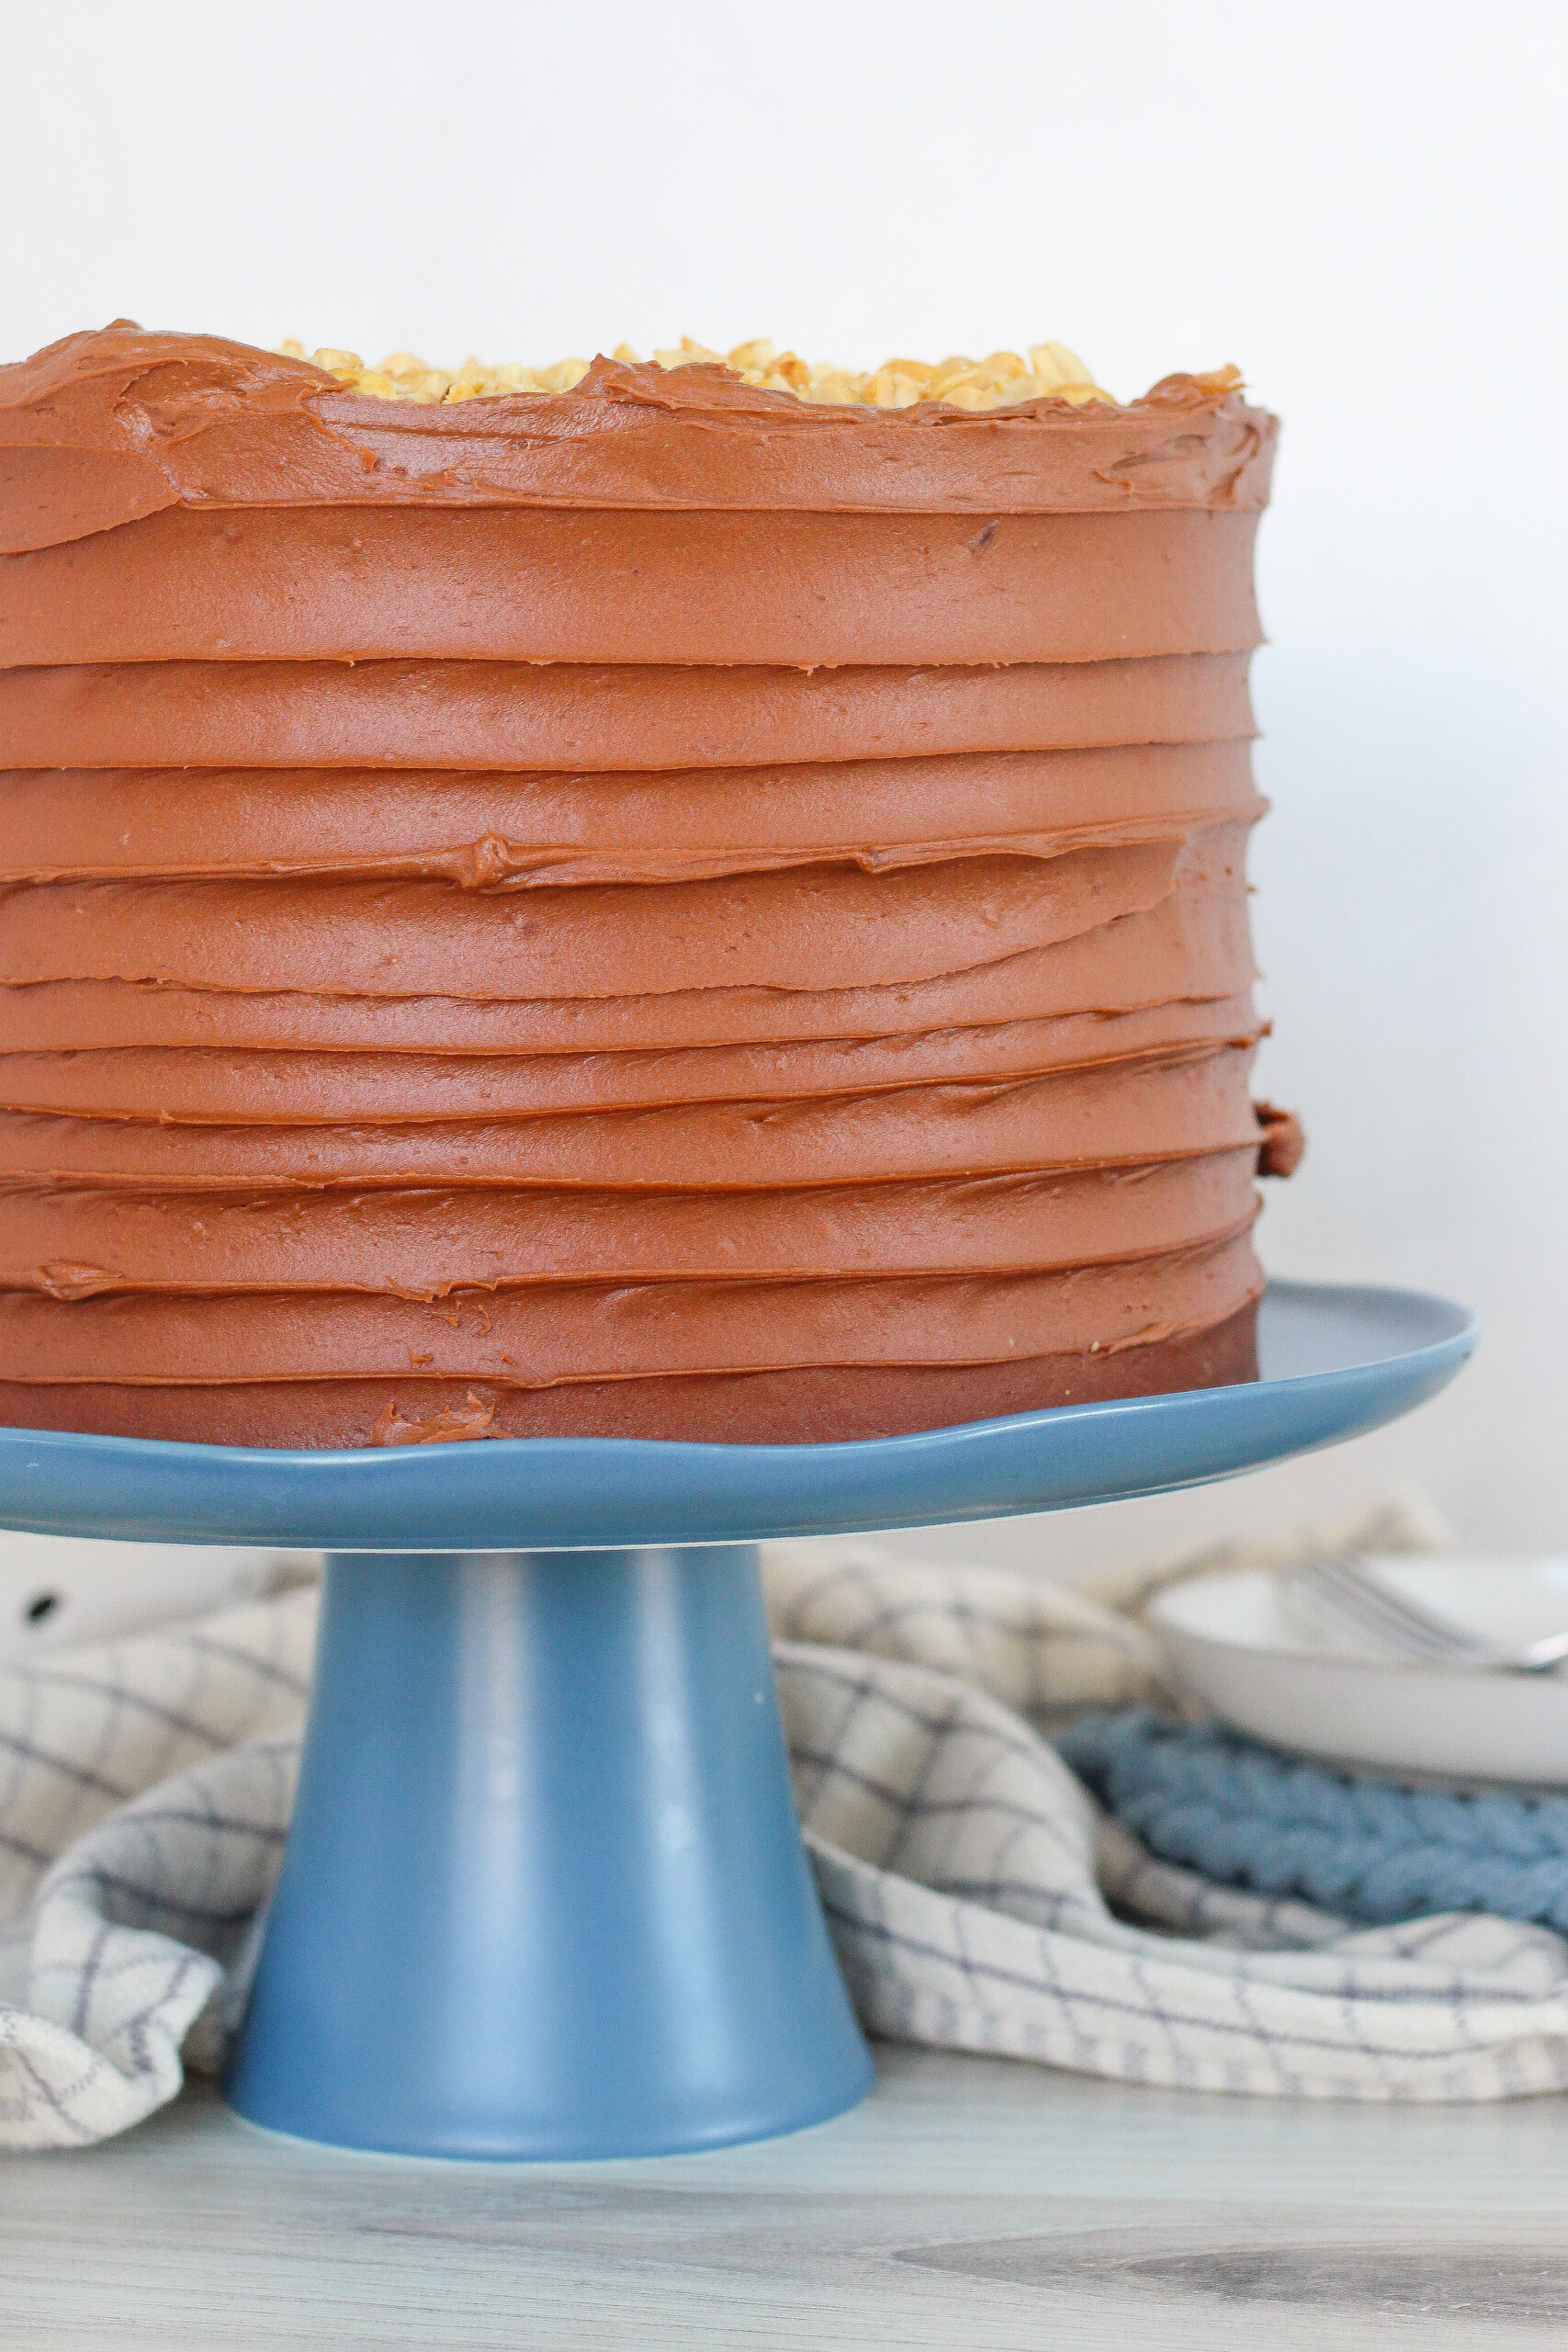 Chocolate cake on a blue cake stand.